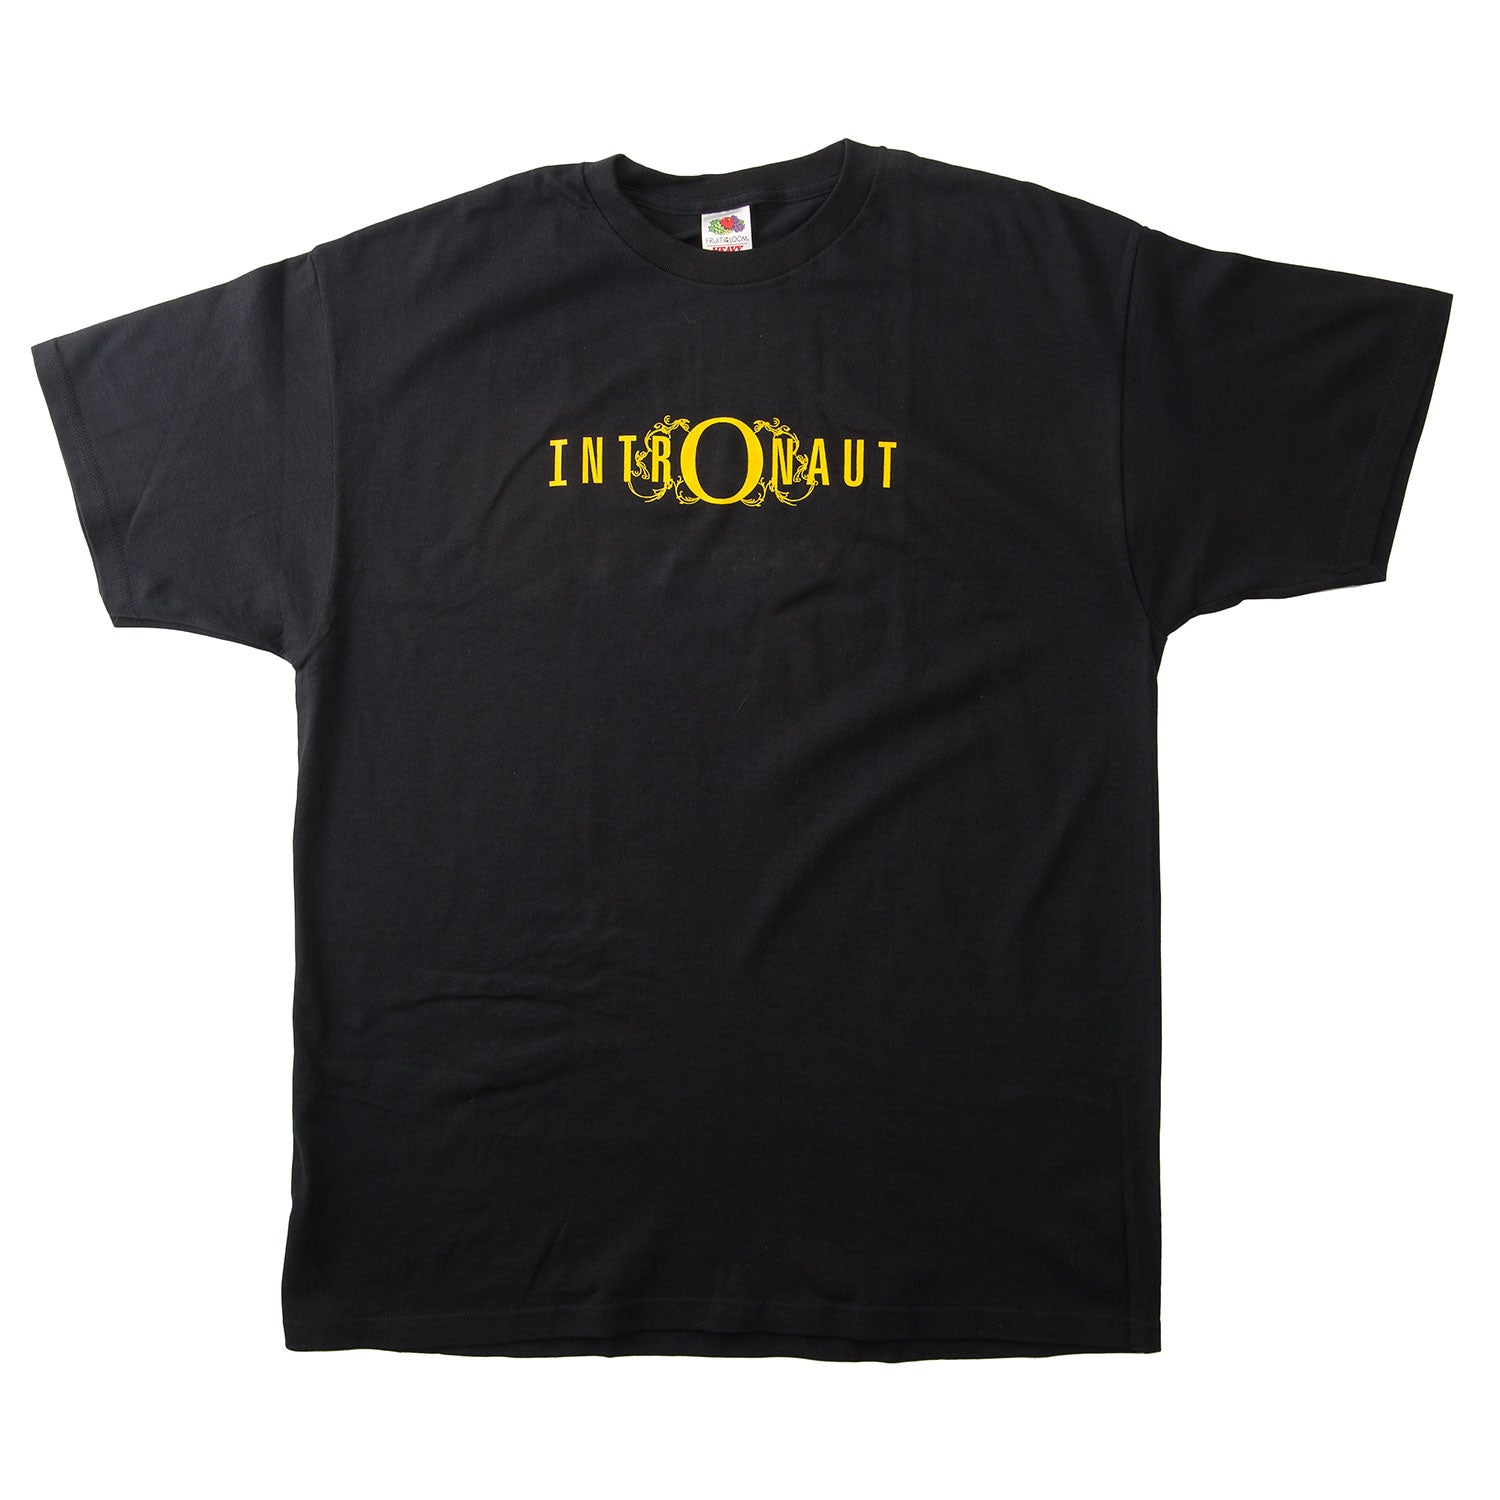 Intronaut "Logo" T-Shirt